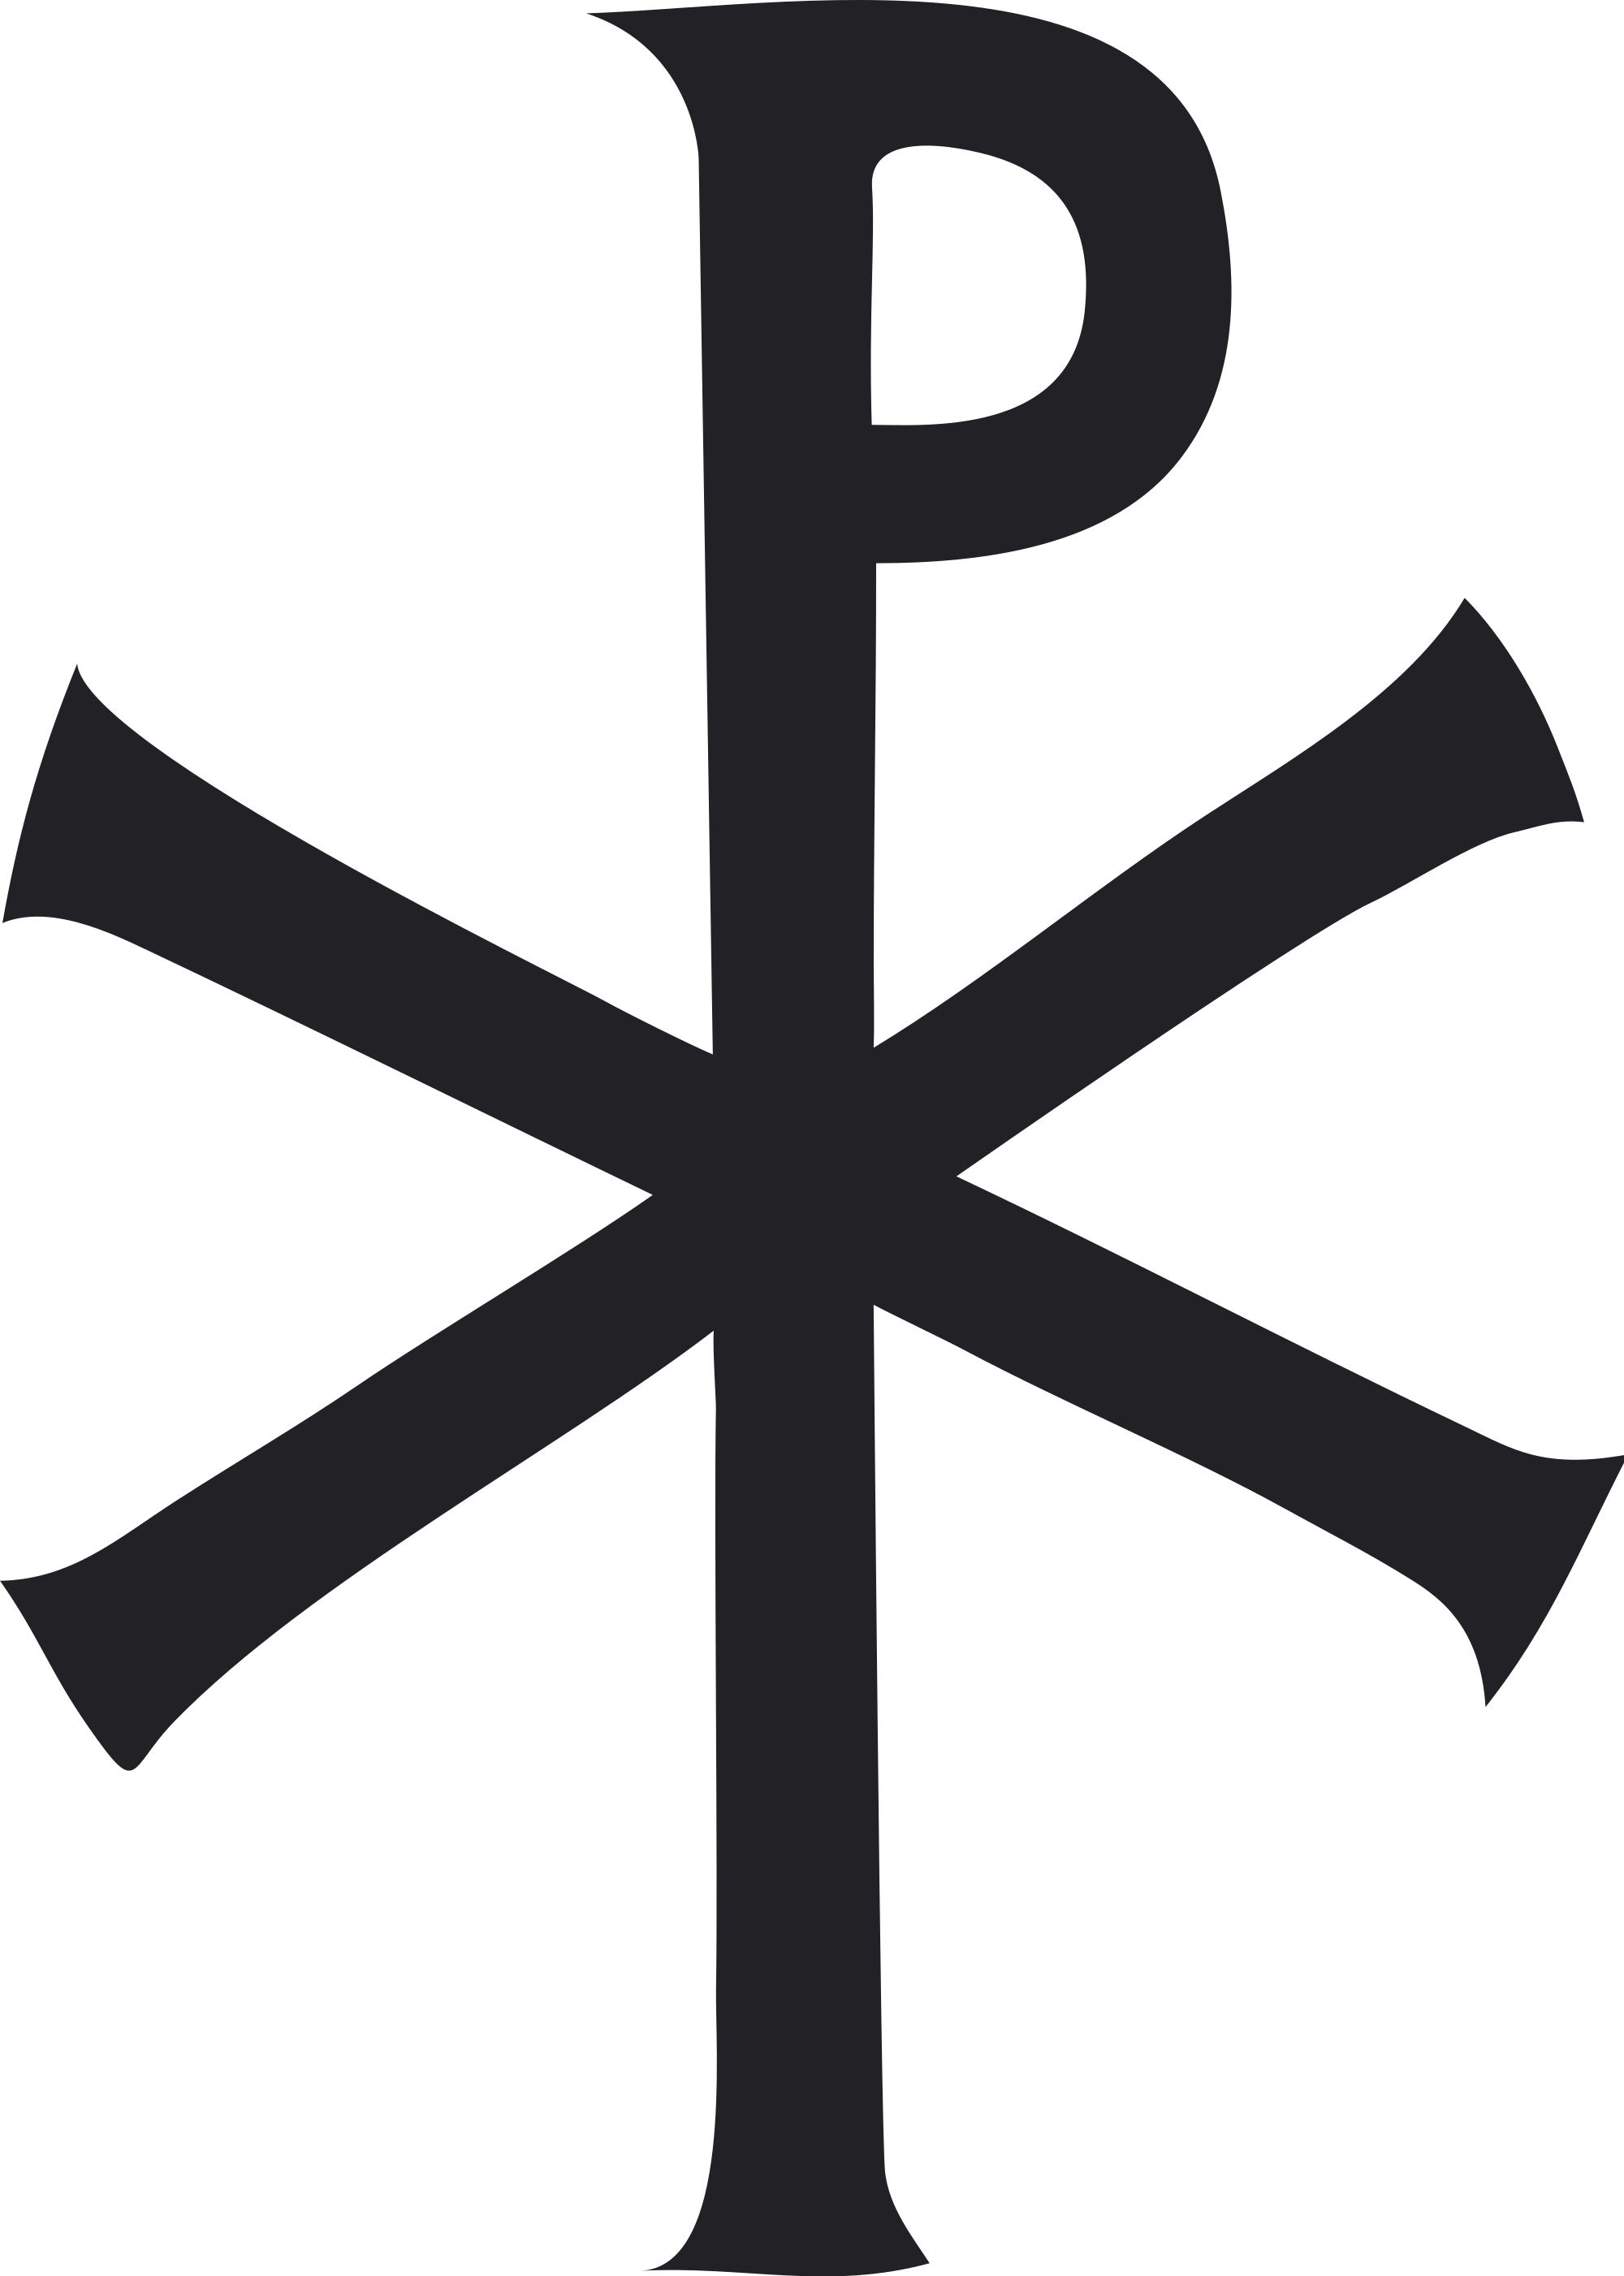 Nails clipart crucifix. Christogram wikipedia